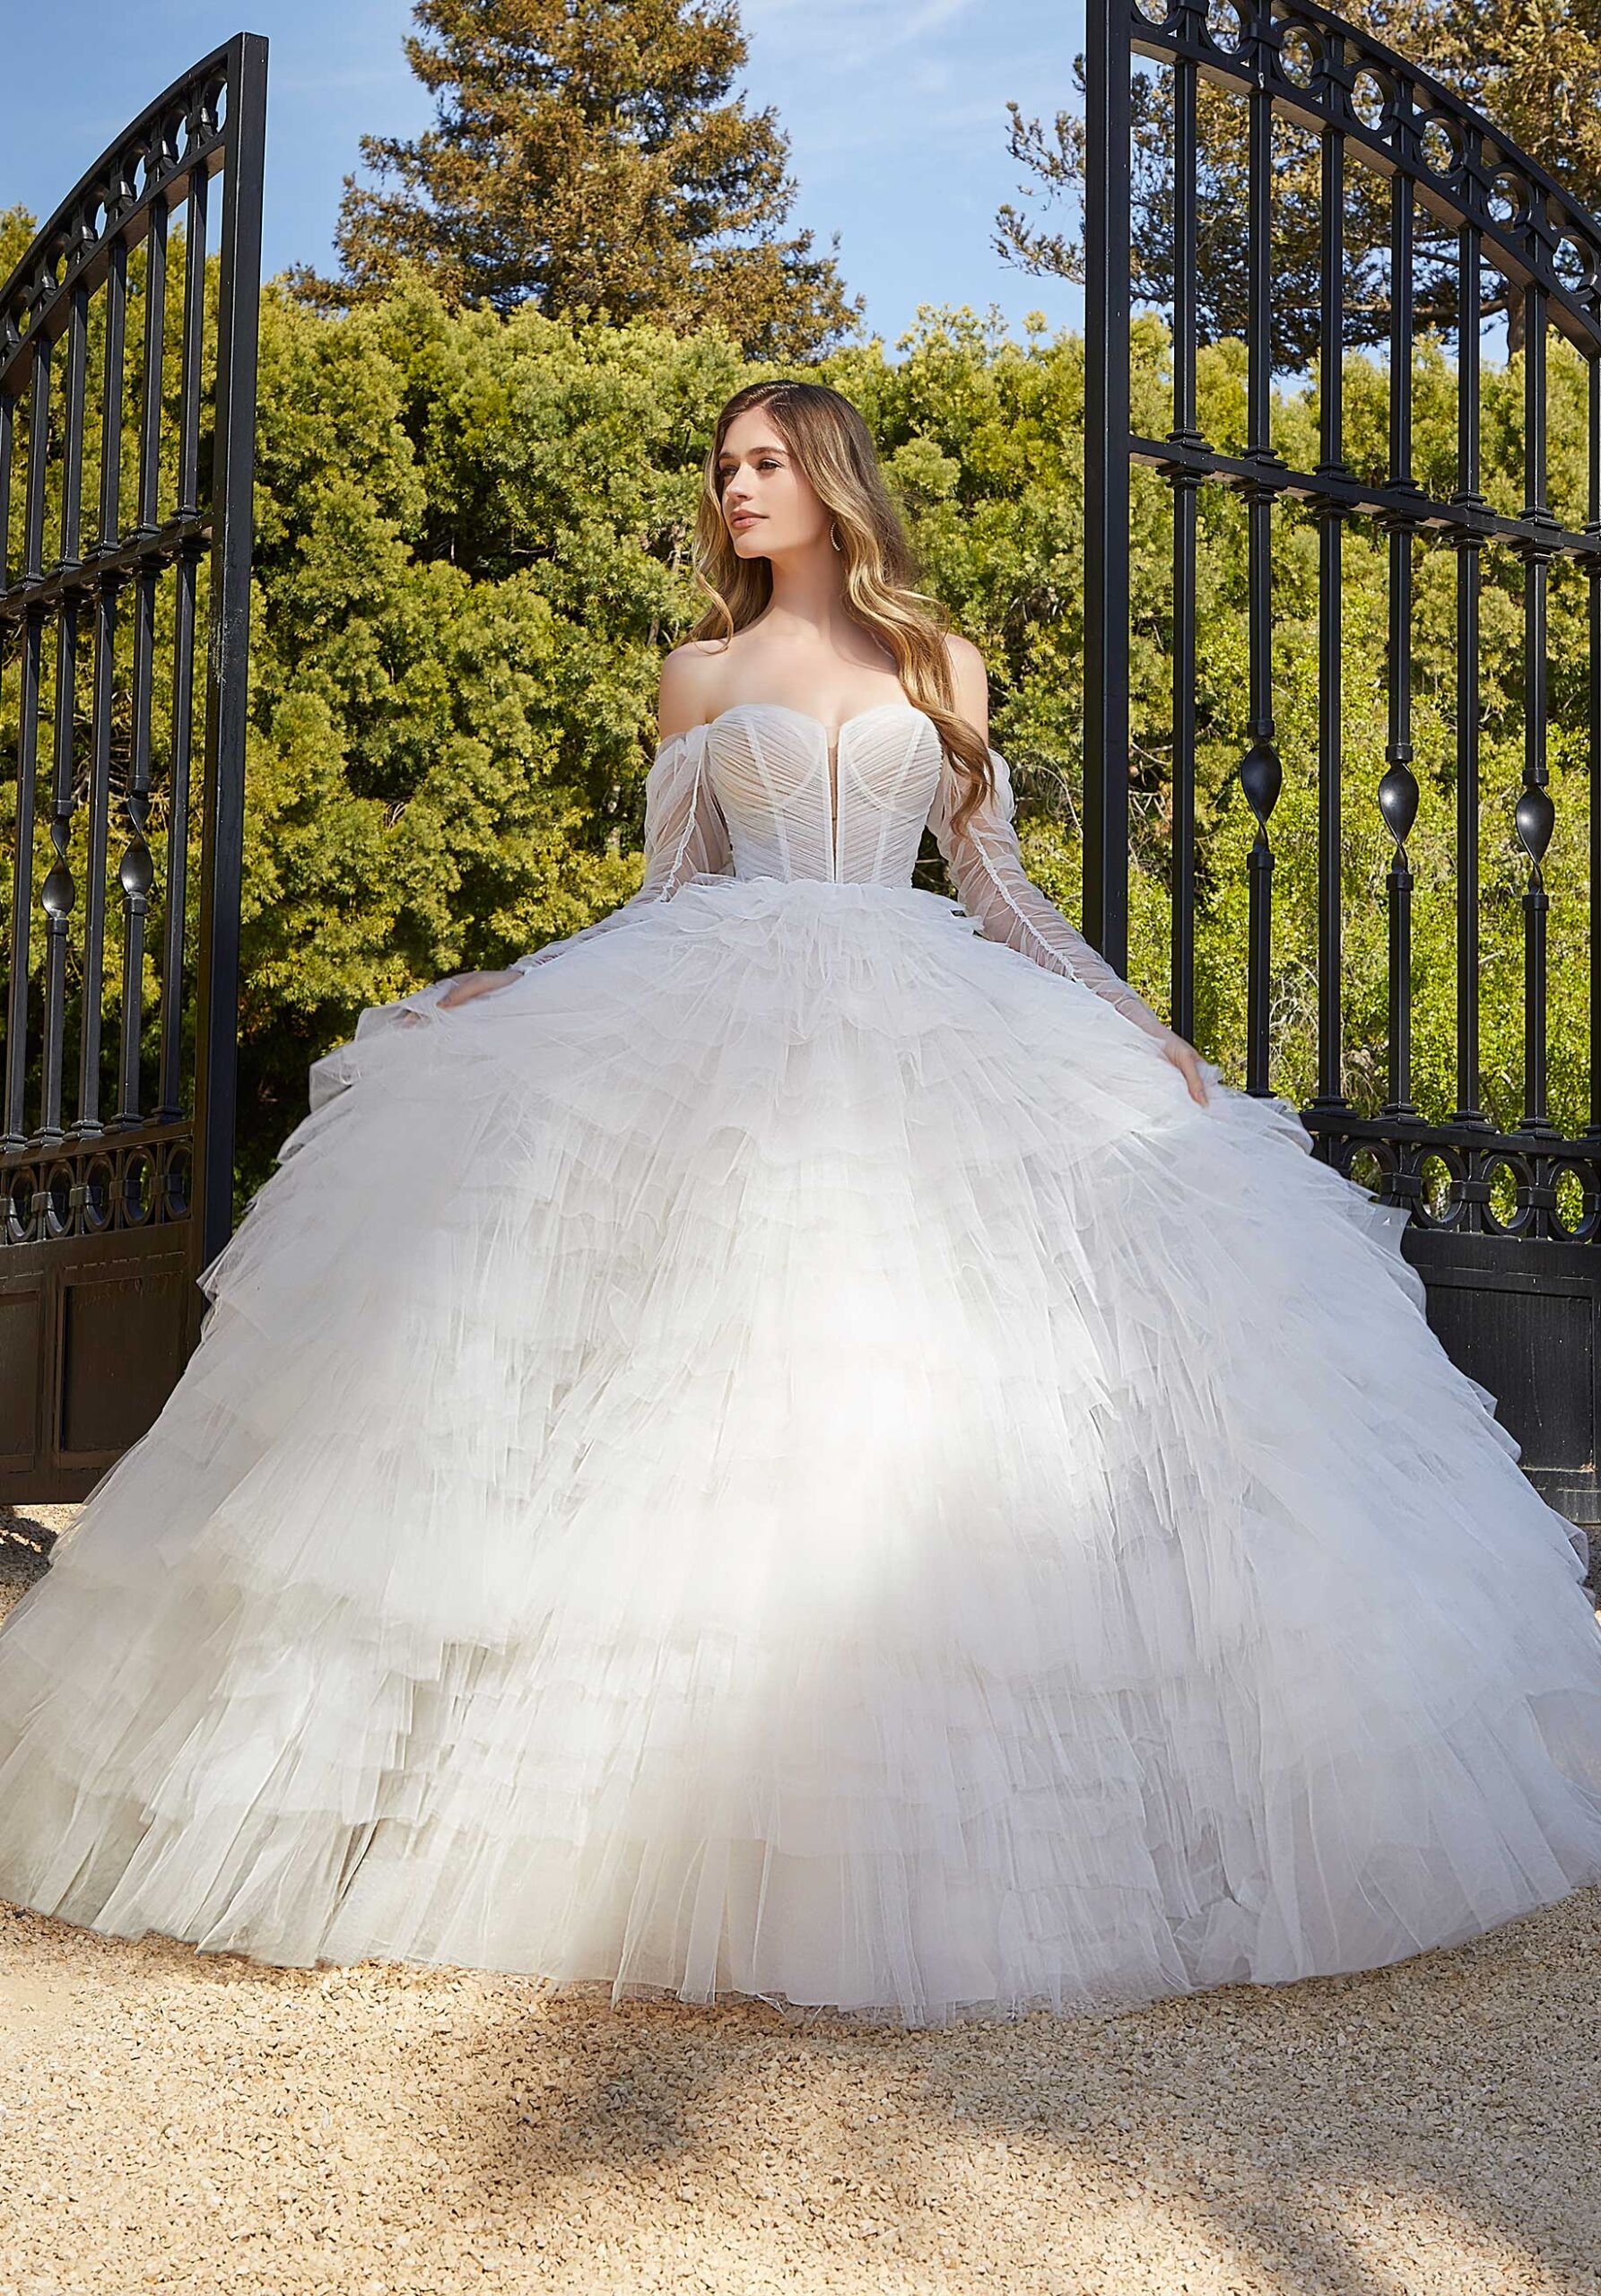 Dua Timeless Bridal Gown | Bridal gowns, Maxi dress wedding, Wedding dresses